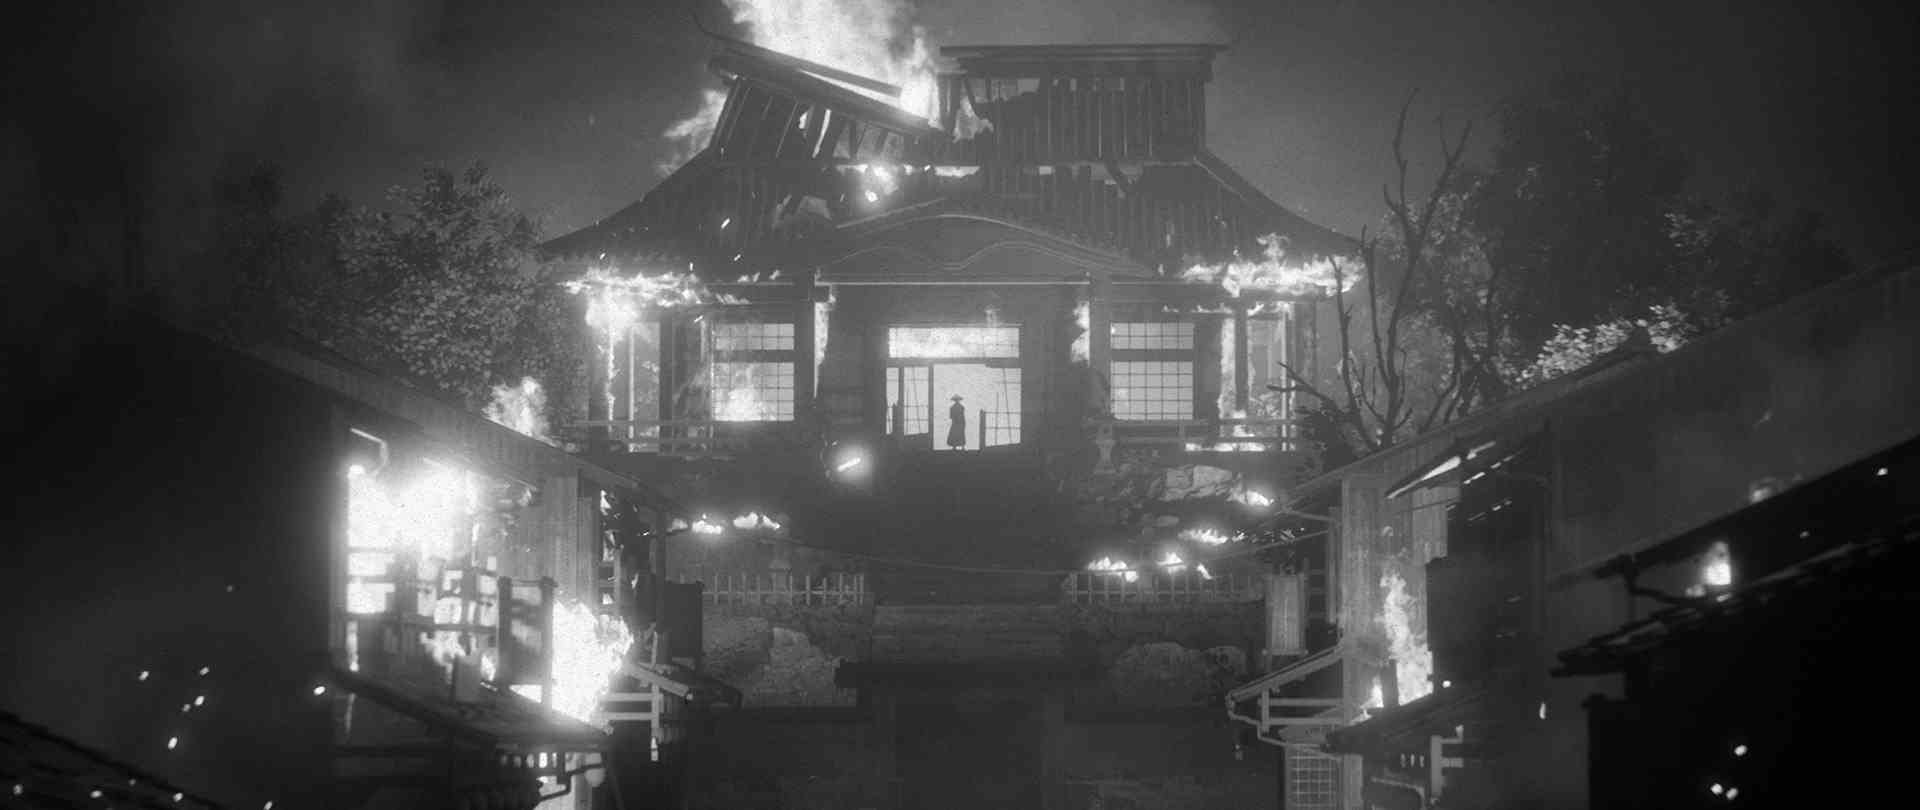 Visueller Stil der Kurosawas Ghost of Tsushima uebertrifft